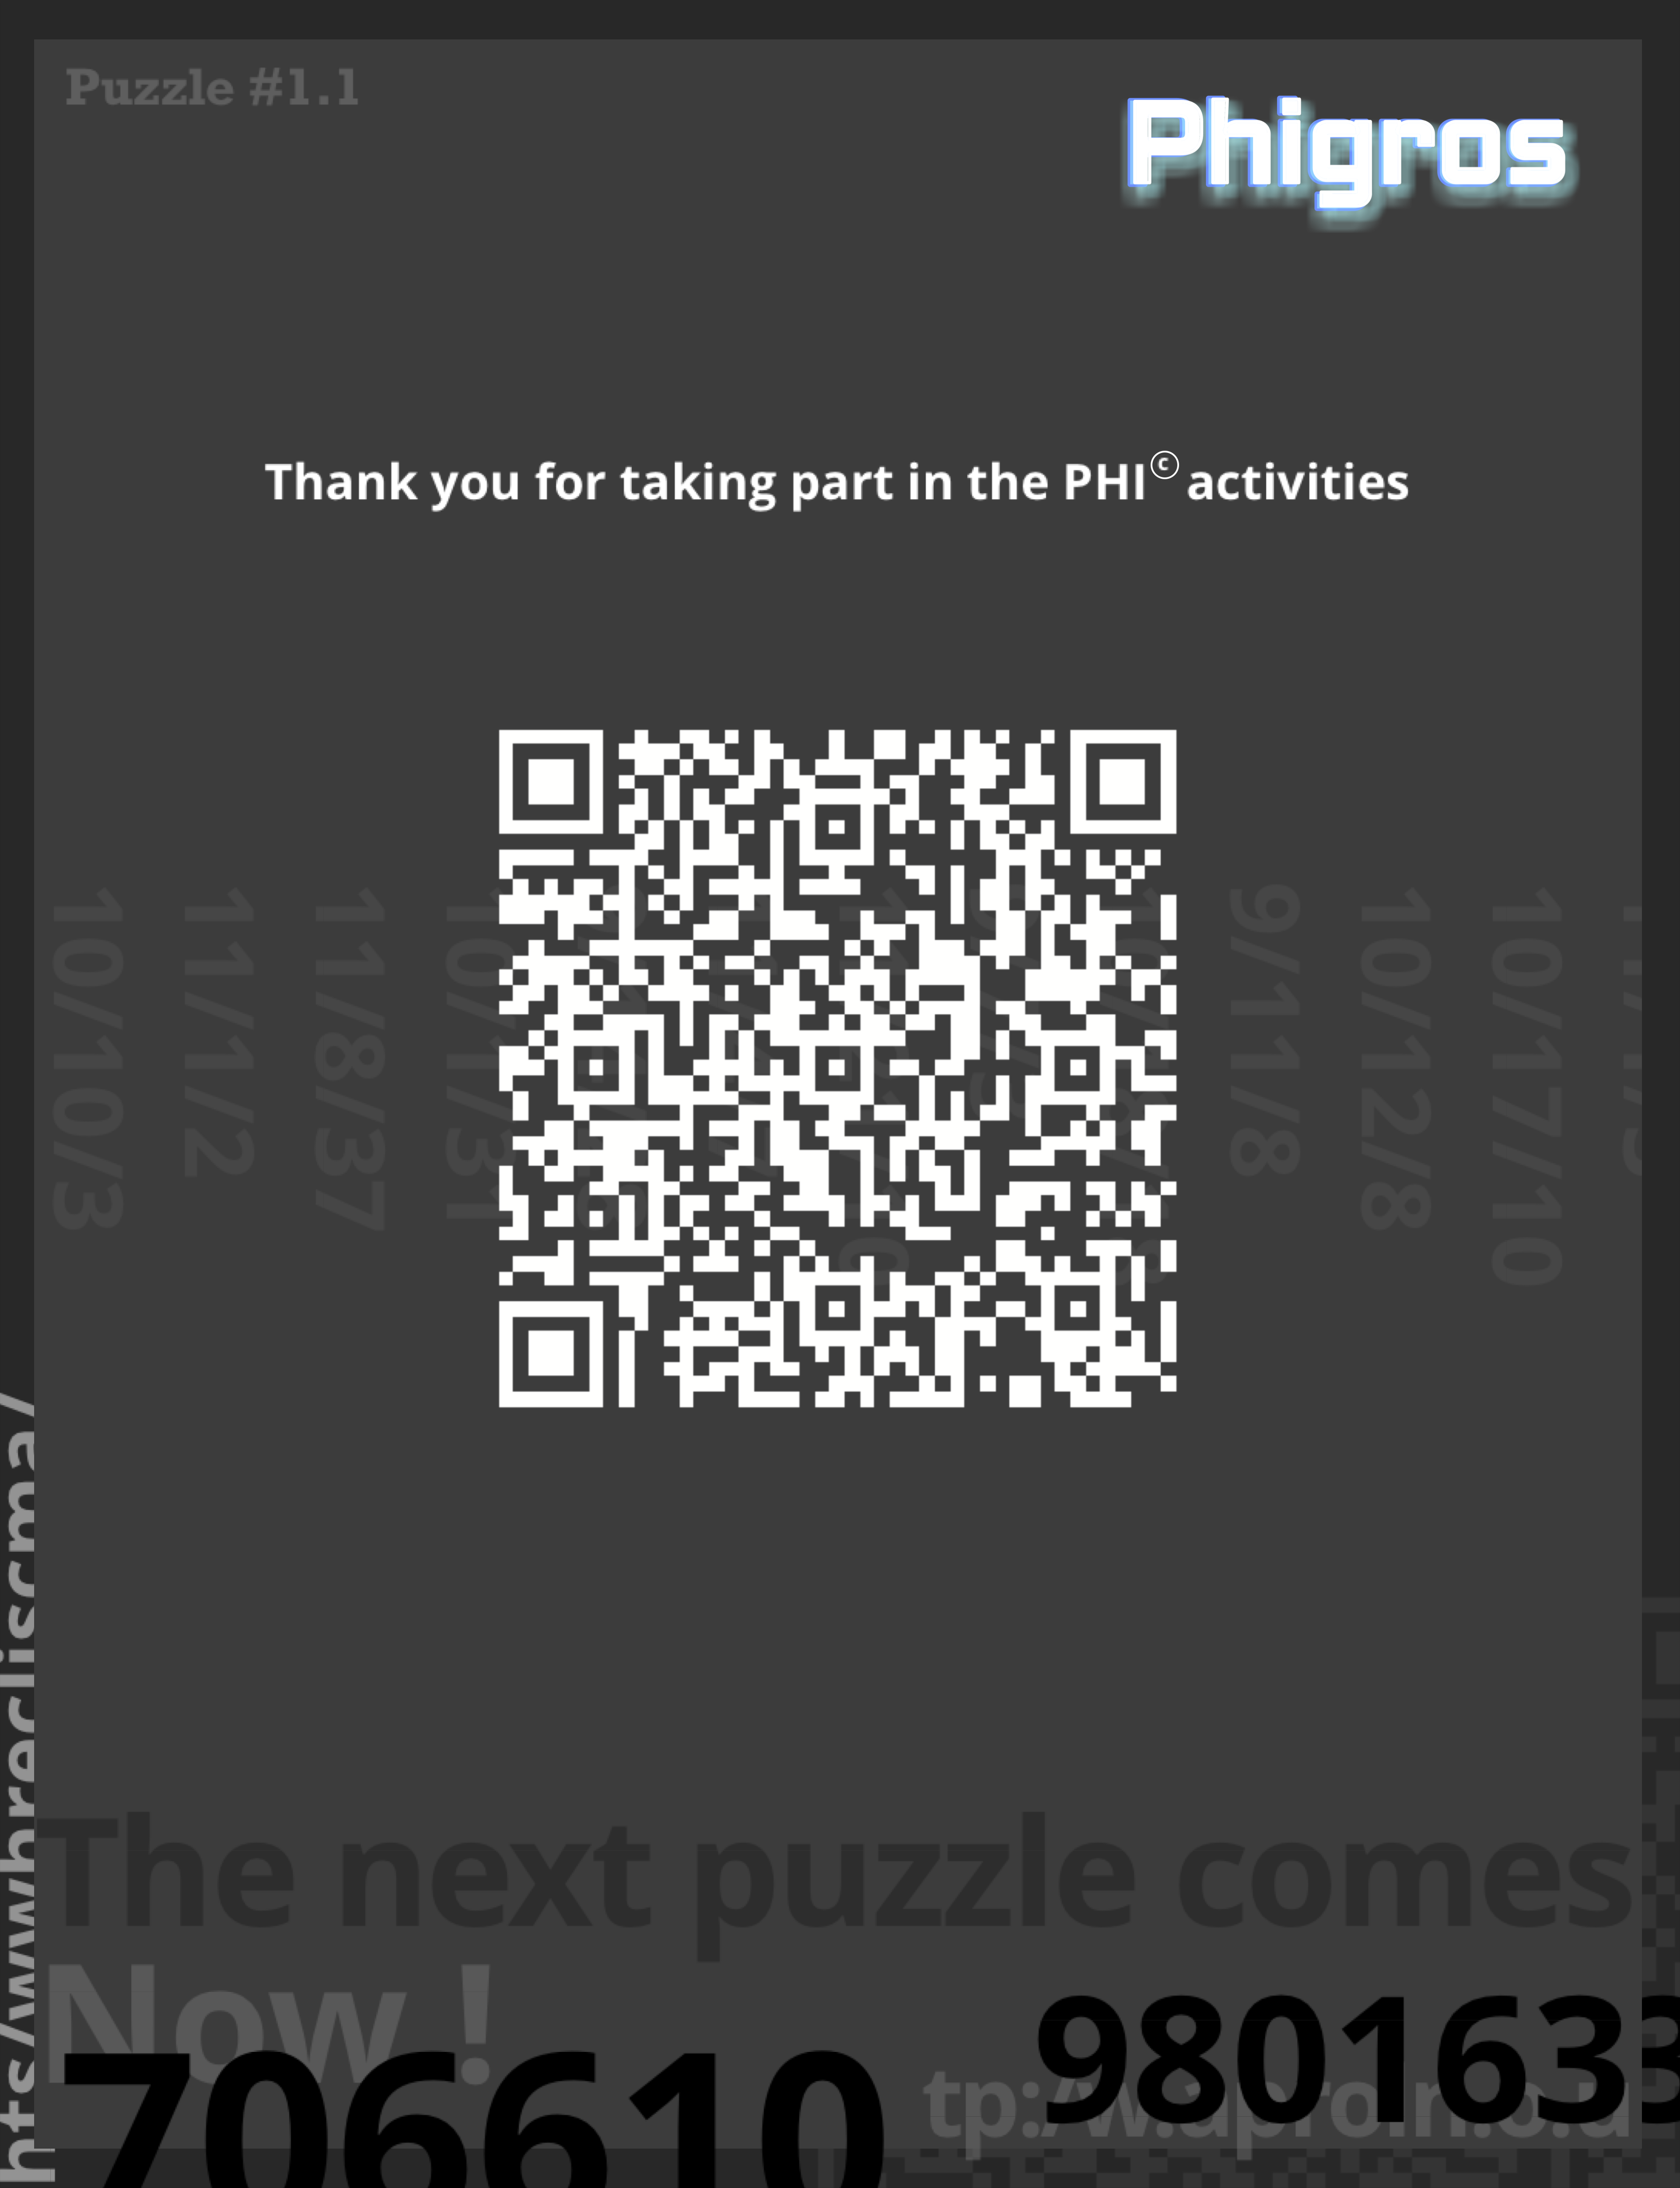 【Phigros】十七的寶藏 Puzzle #1.1謎題解密及補充 - 第1張